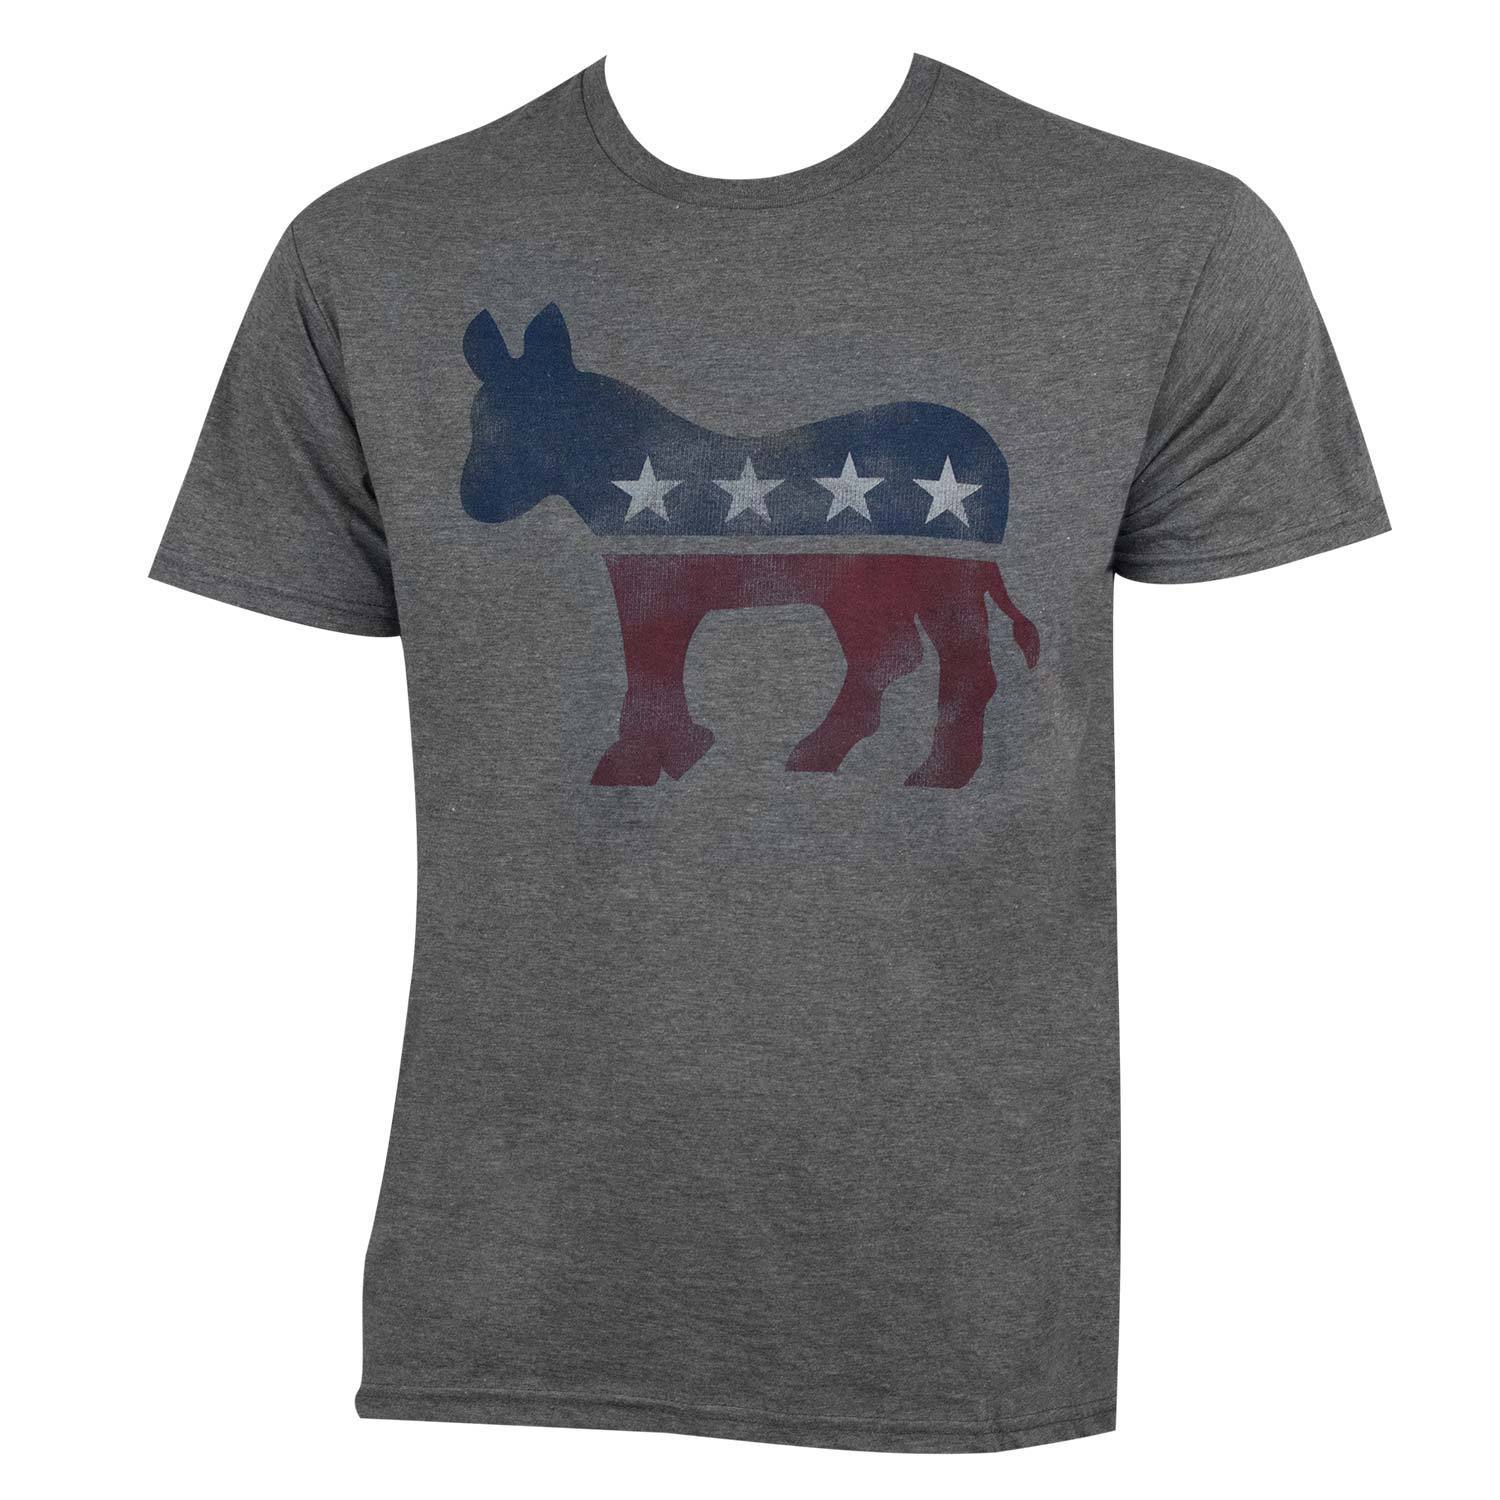 Men's Grey Distressed Democrat Donkey T-shirt